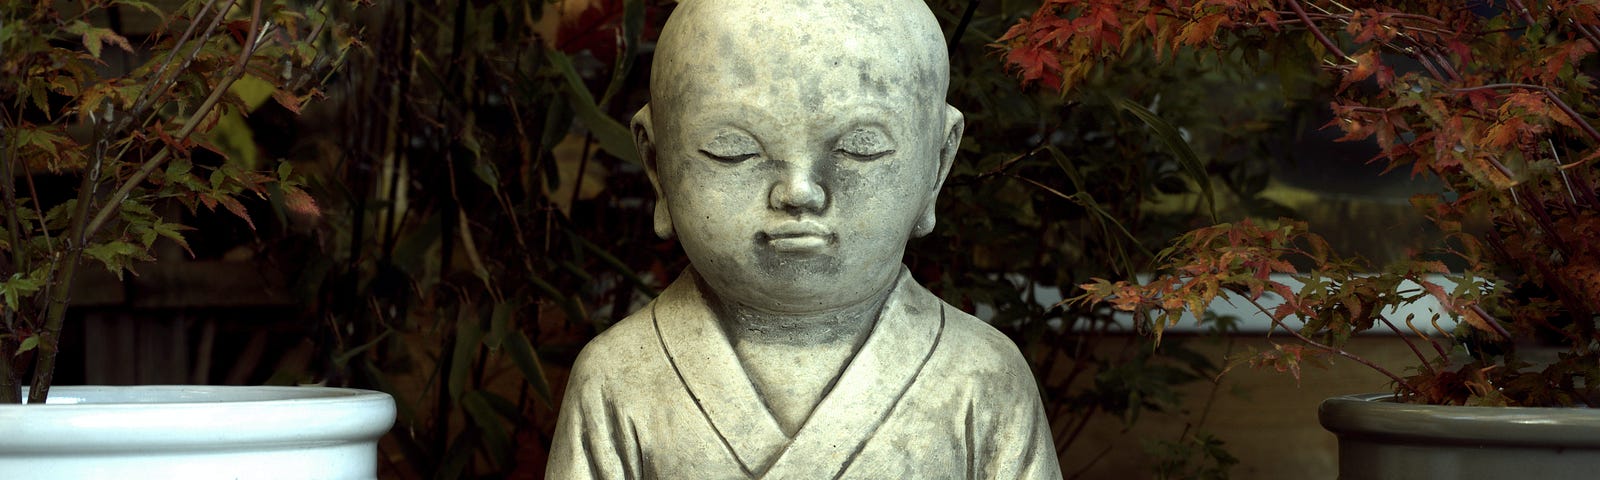 Zen Habits. Productivity. Bad habits. 101 Zen Stories. A sitting buddha.